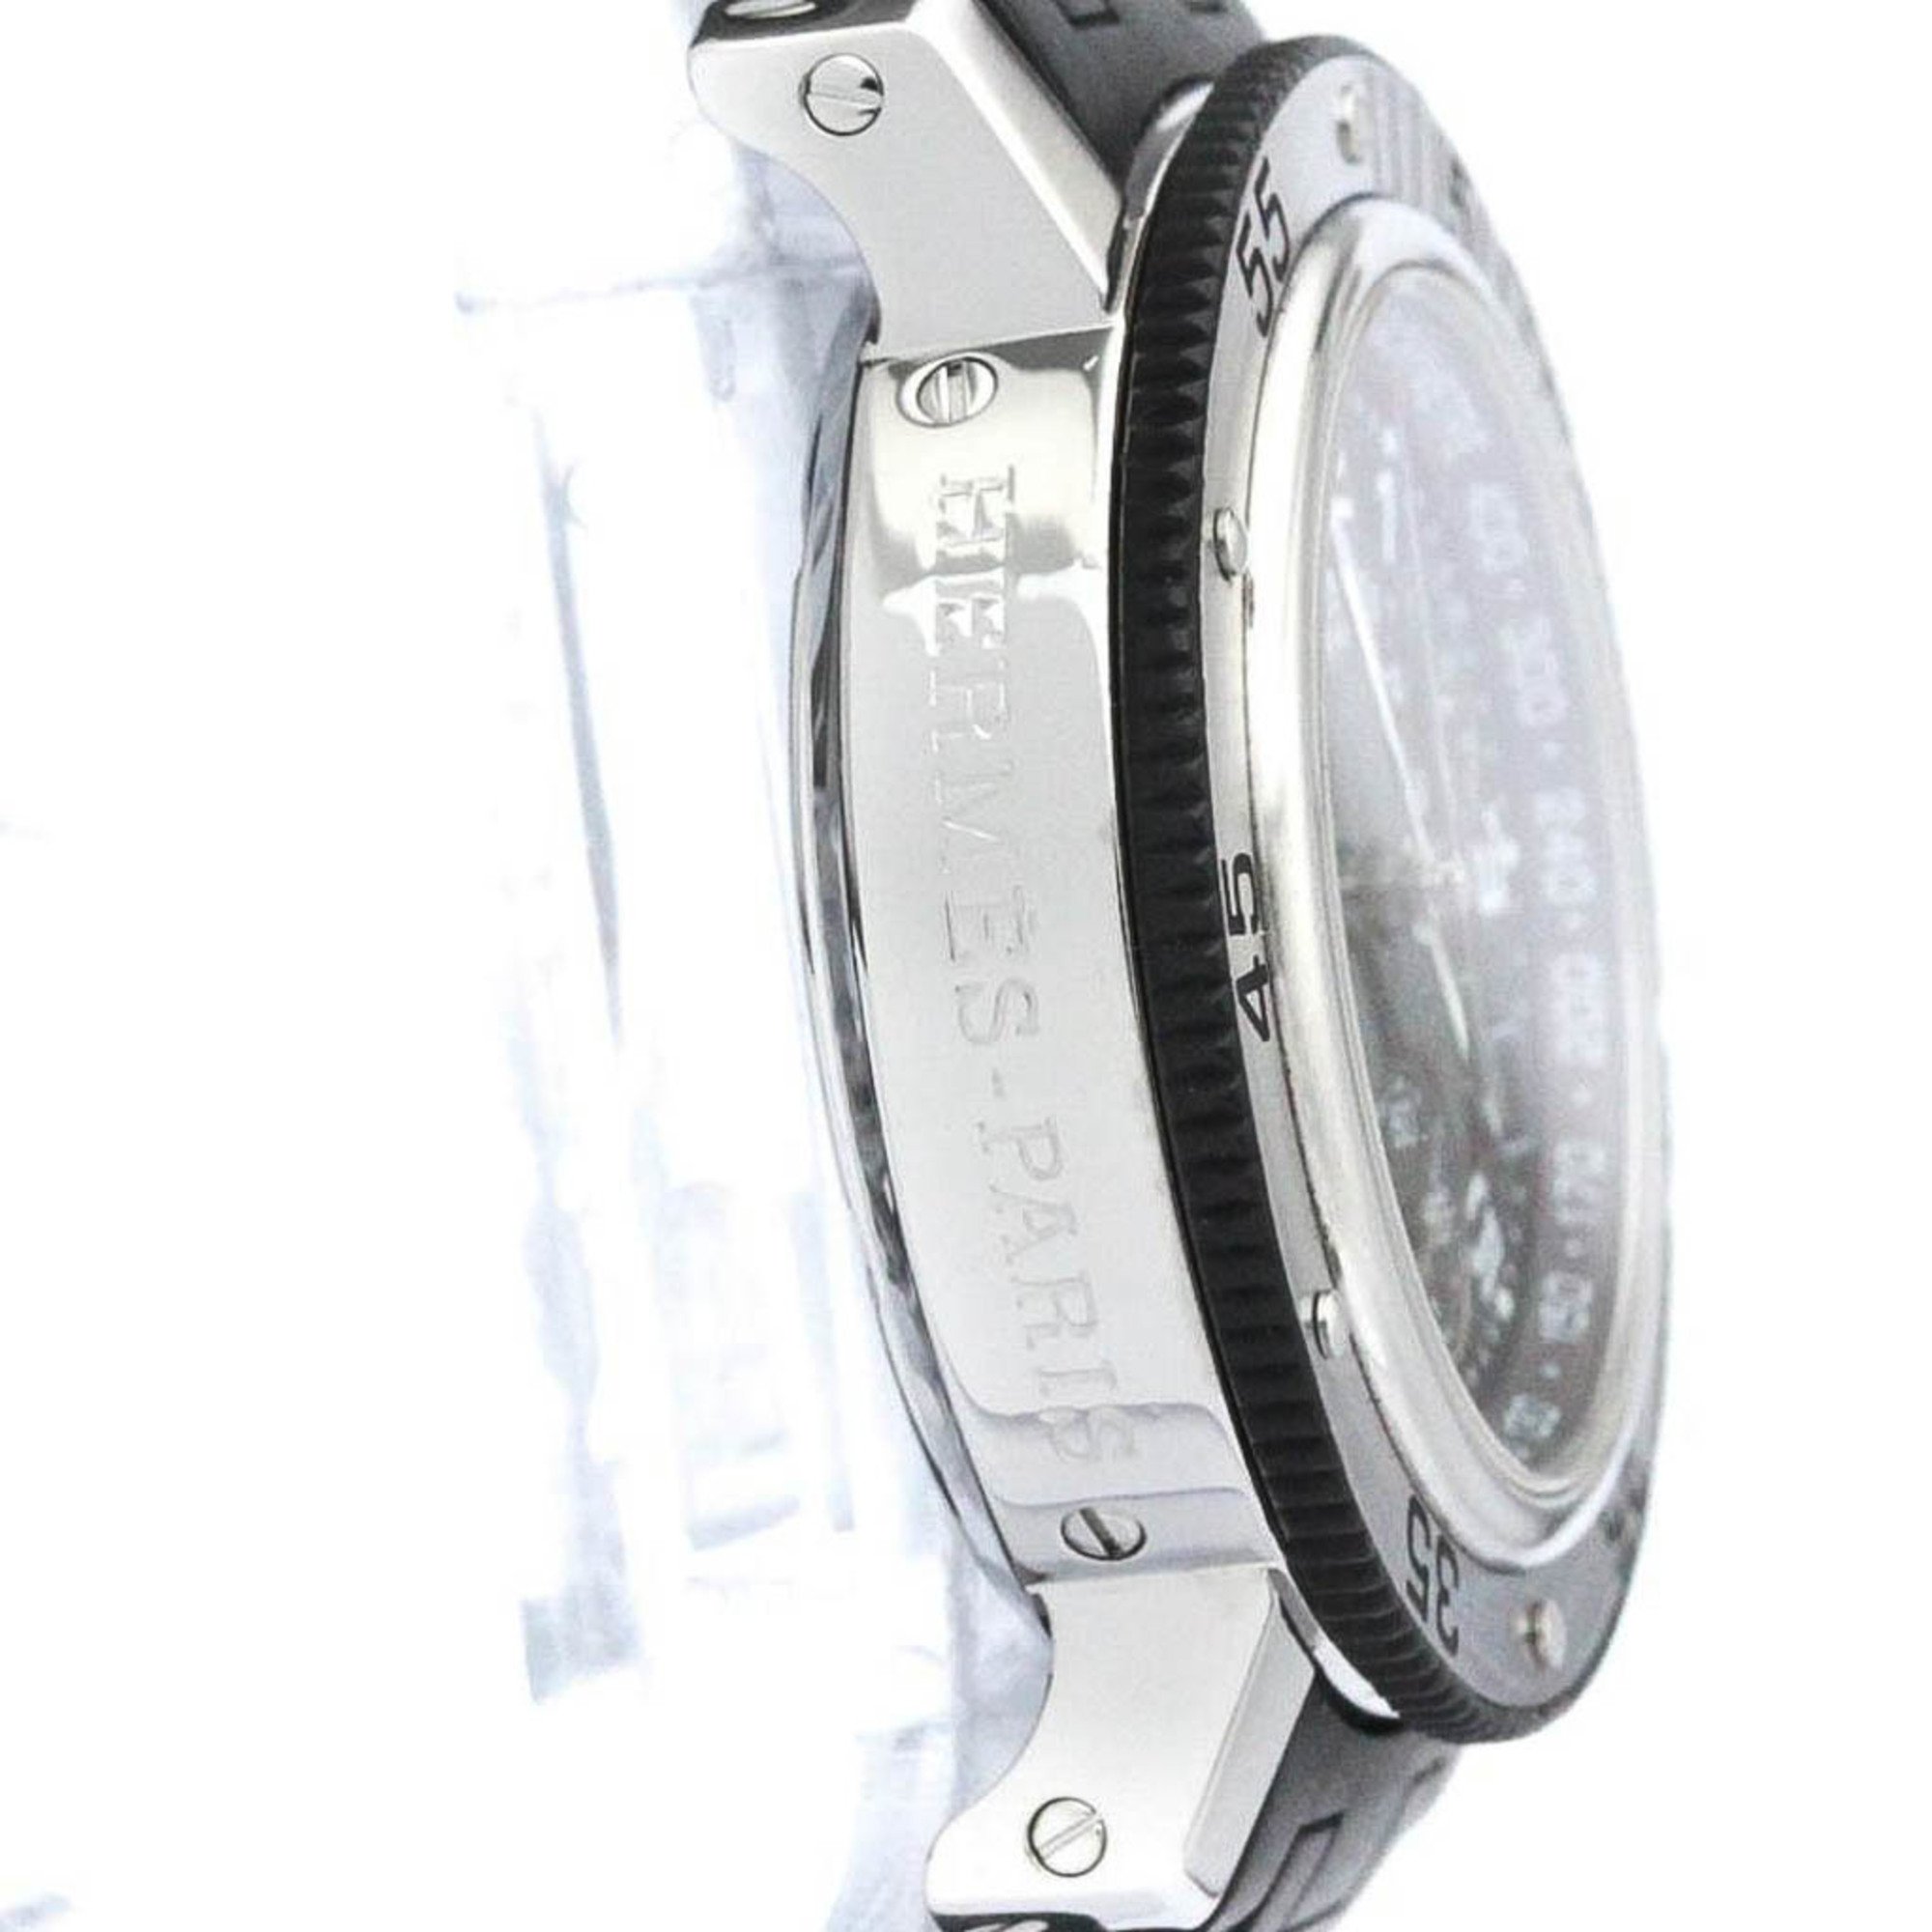 Polished HERMES Clipper Diver Chronograph Quartz Ladies Watch CL2.315 BF560787